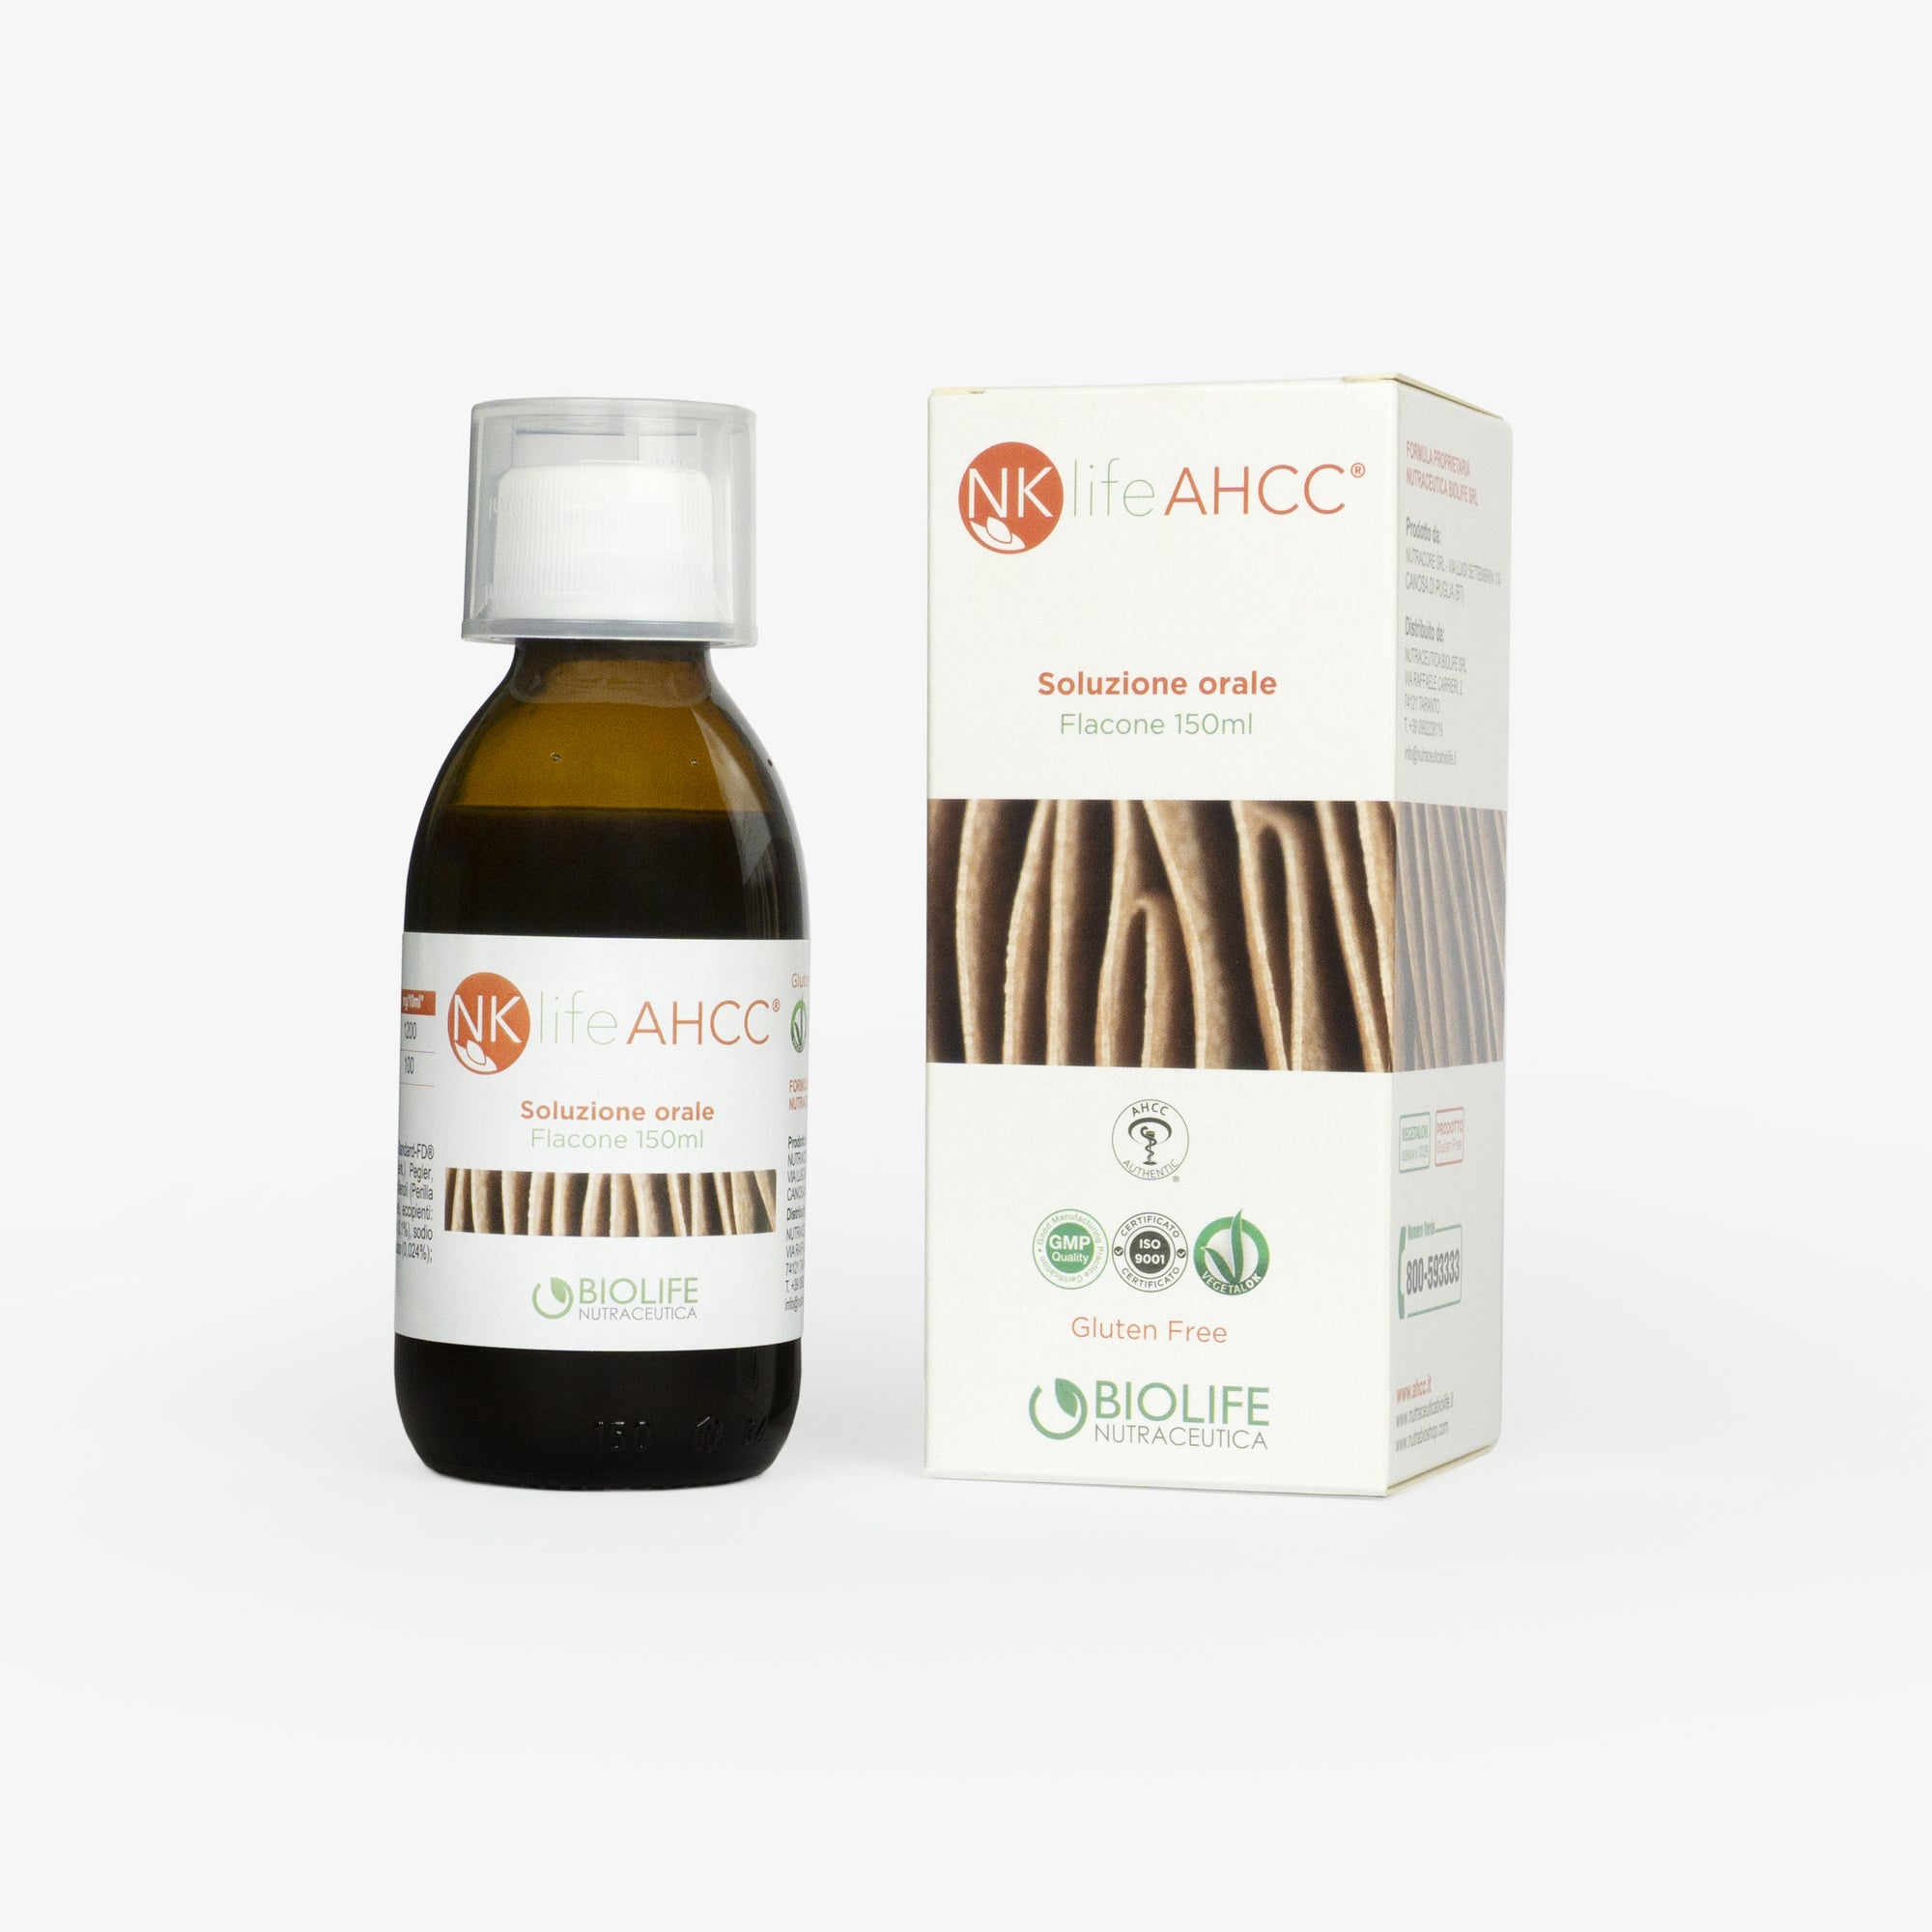 NKlife AHCC Soluzione Orale Flacone 150 ml